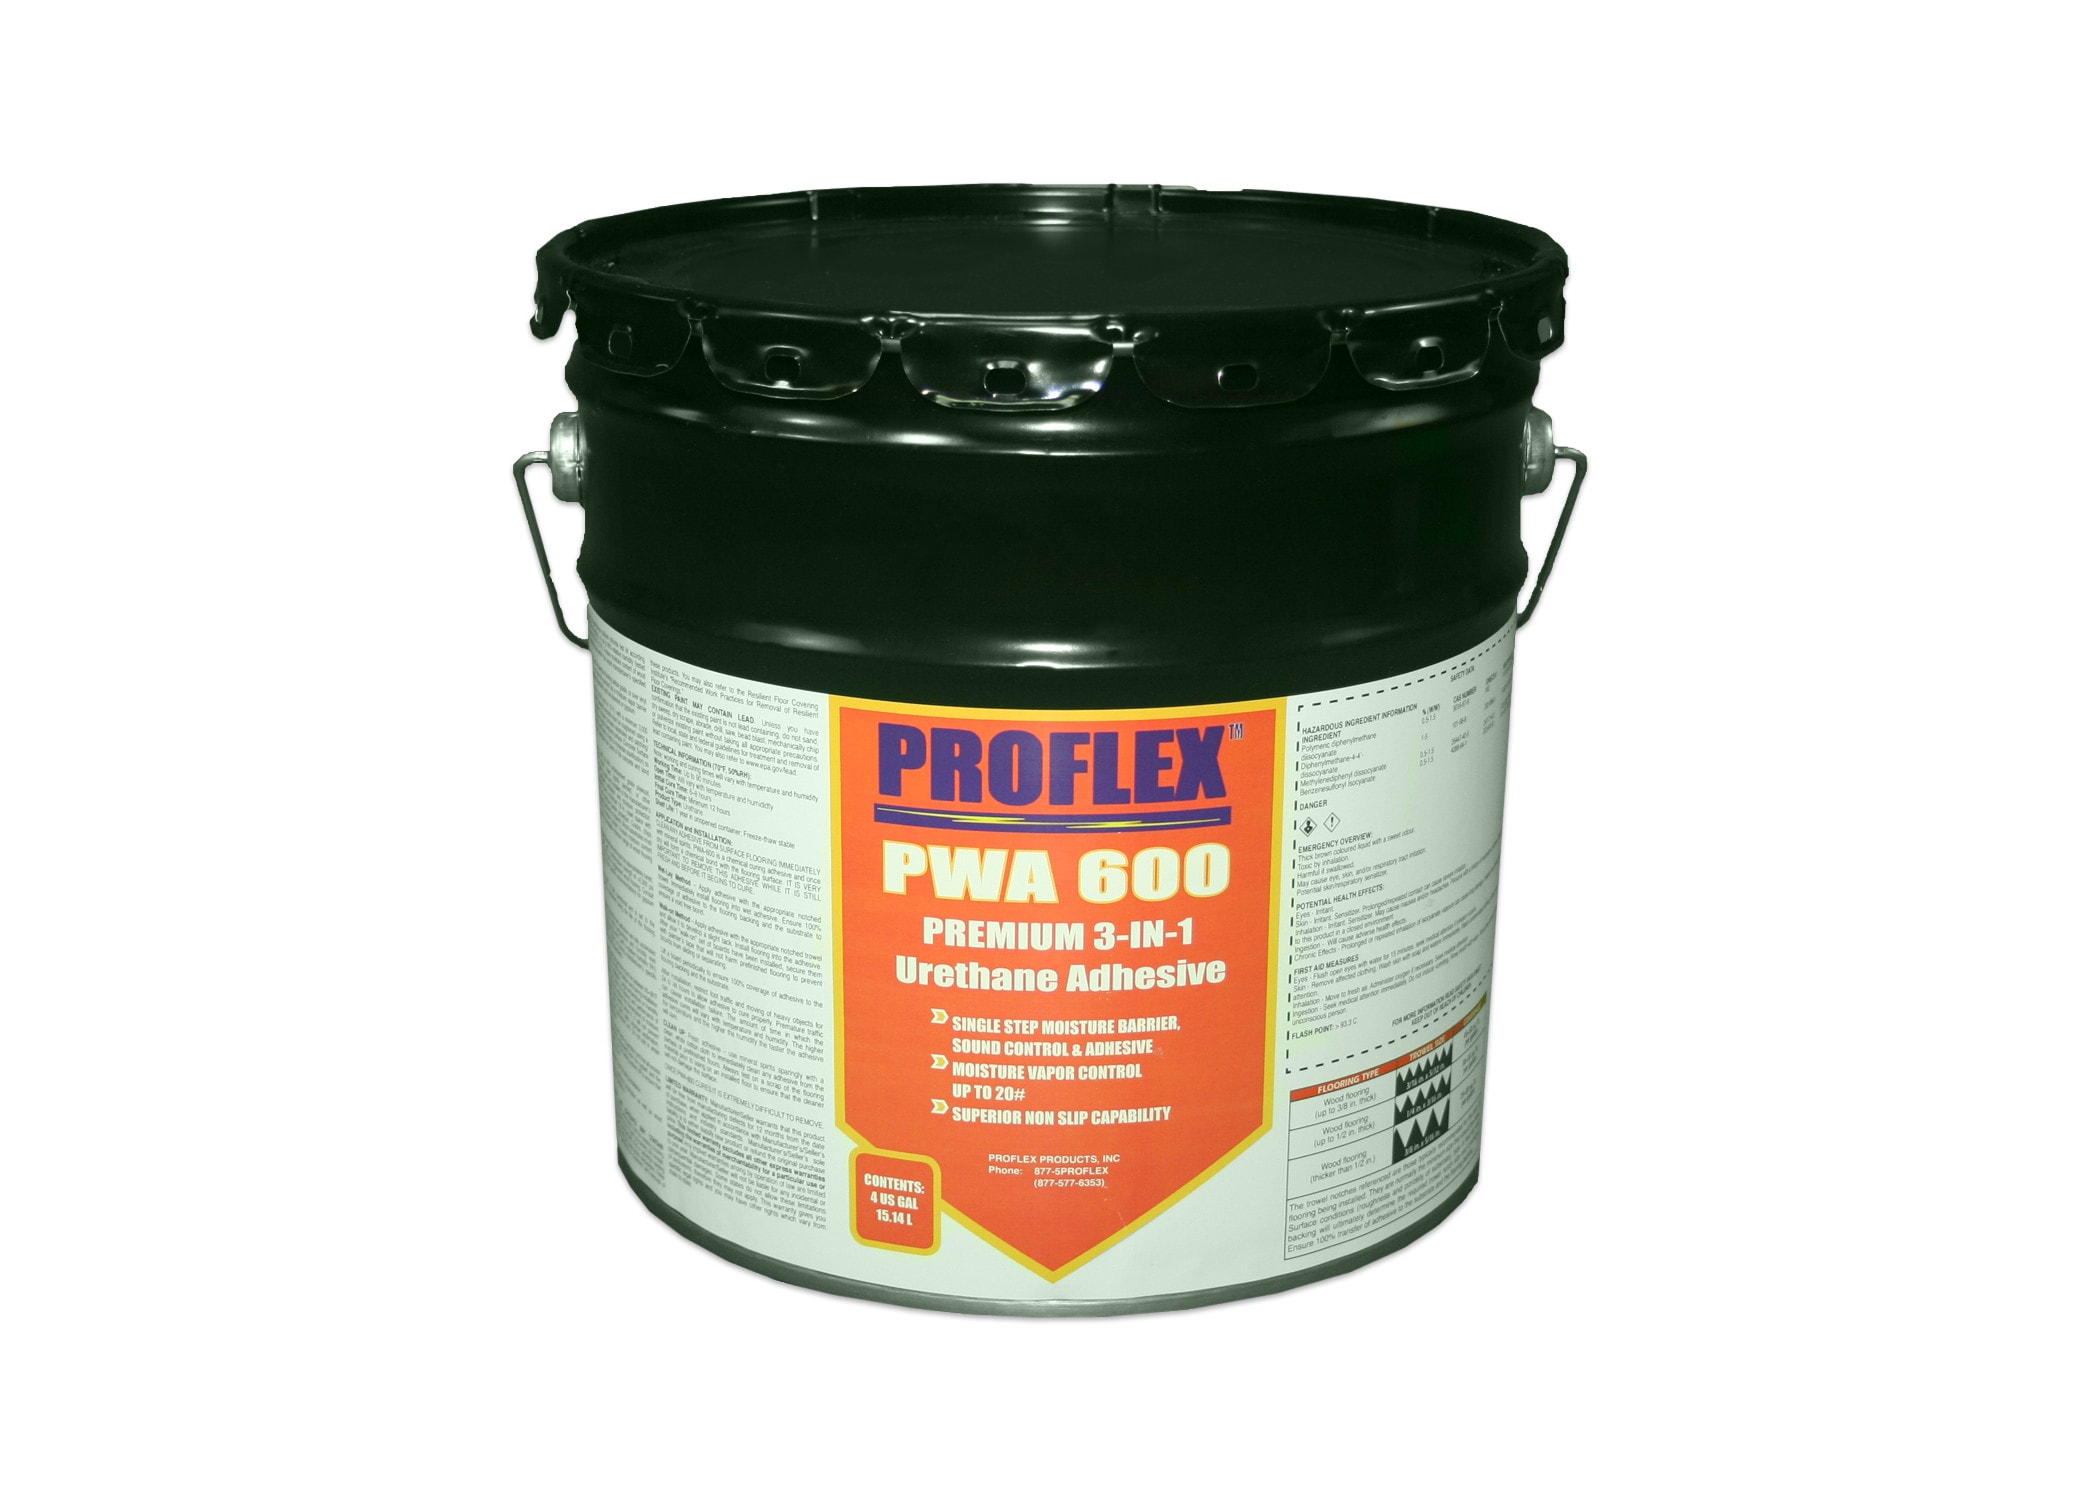 Proflex Wood Flooring Adhesive 4, Hardwood Flooring Adhesive Concrete